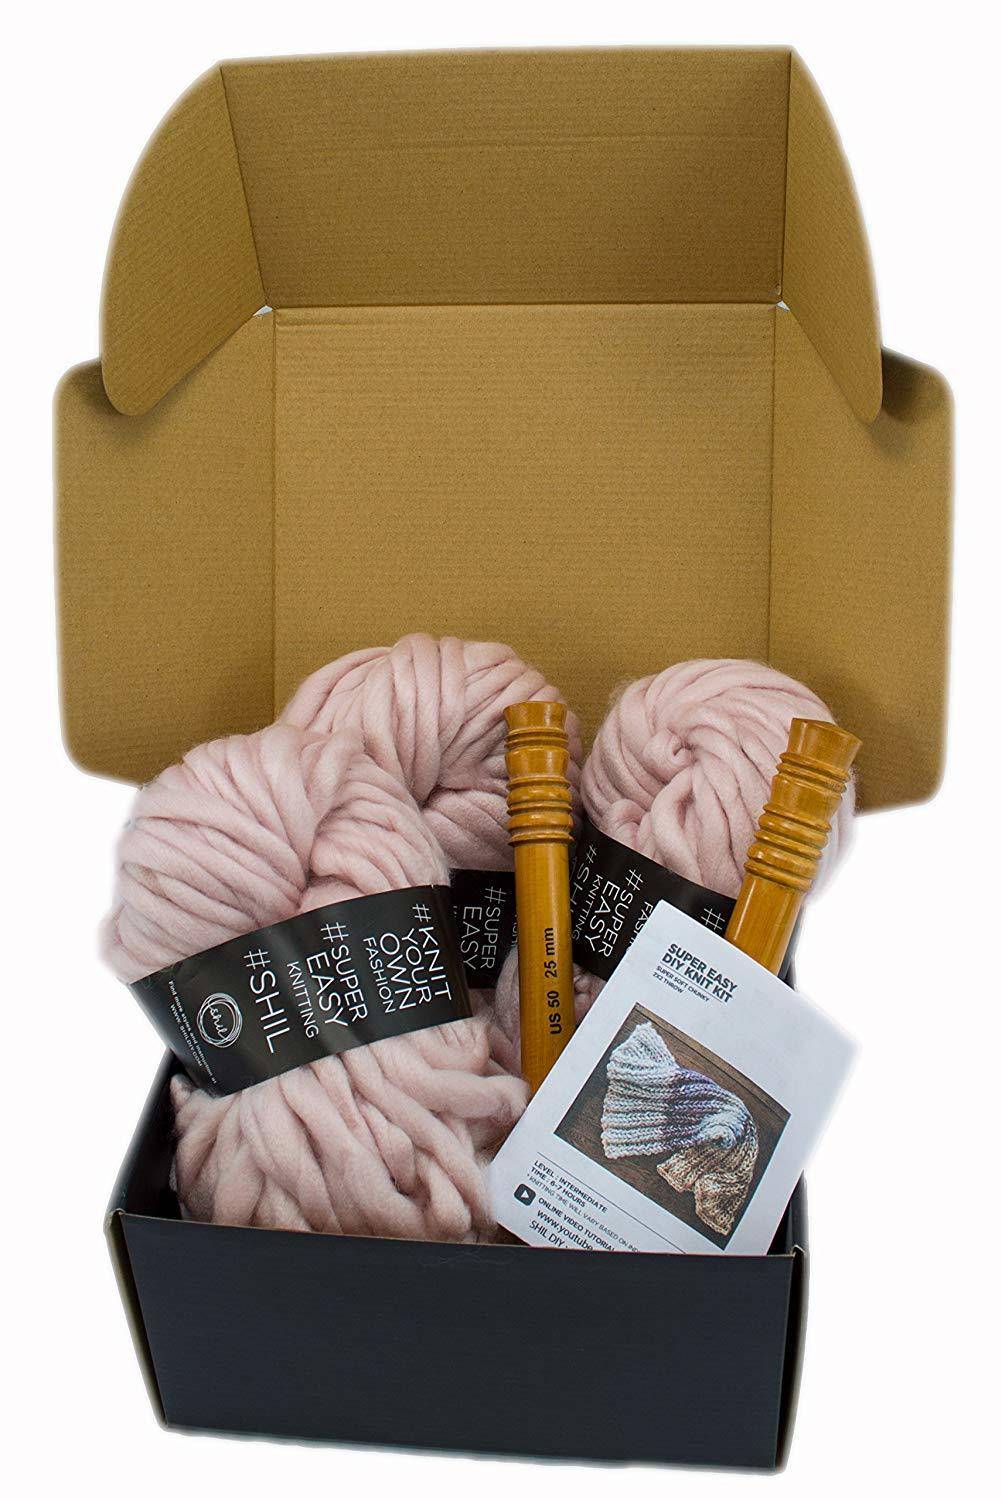 Chunky knit blanket DIY kit